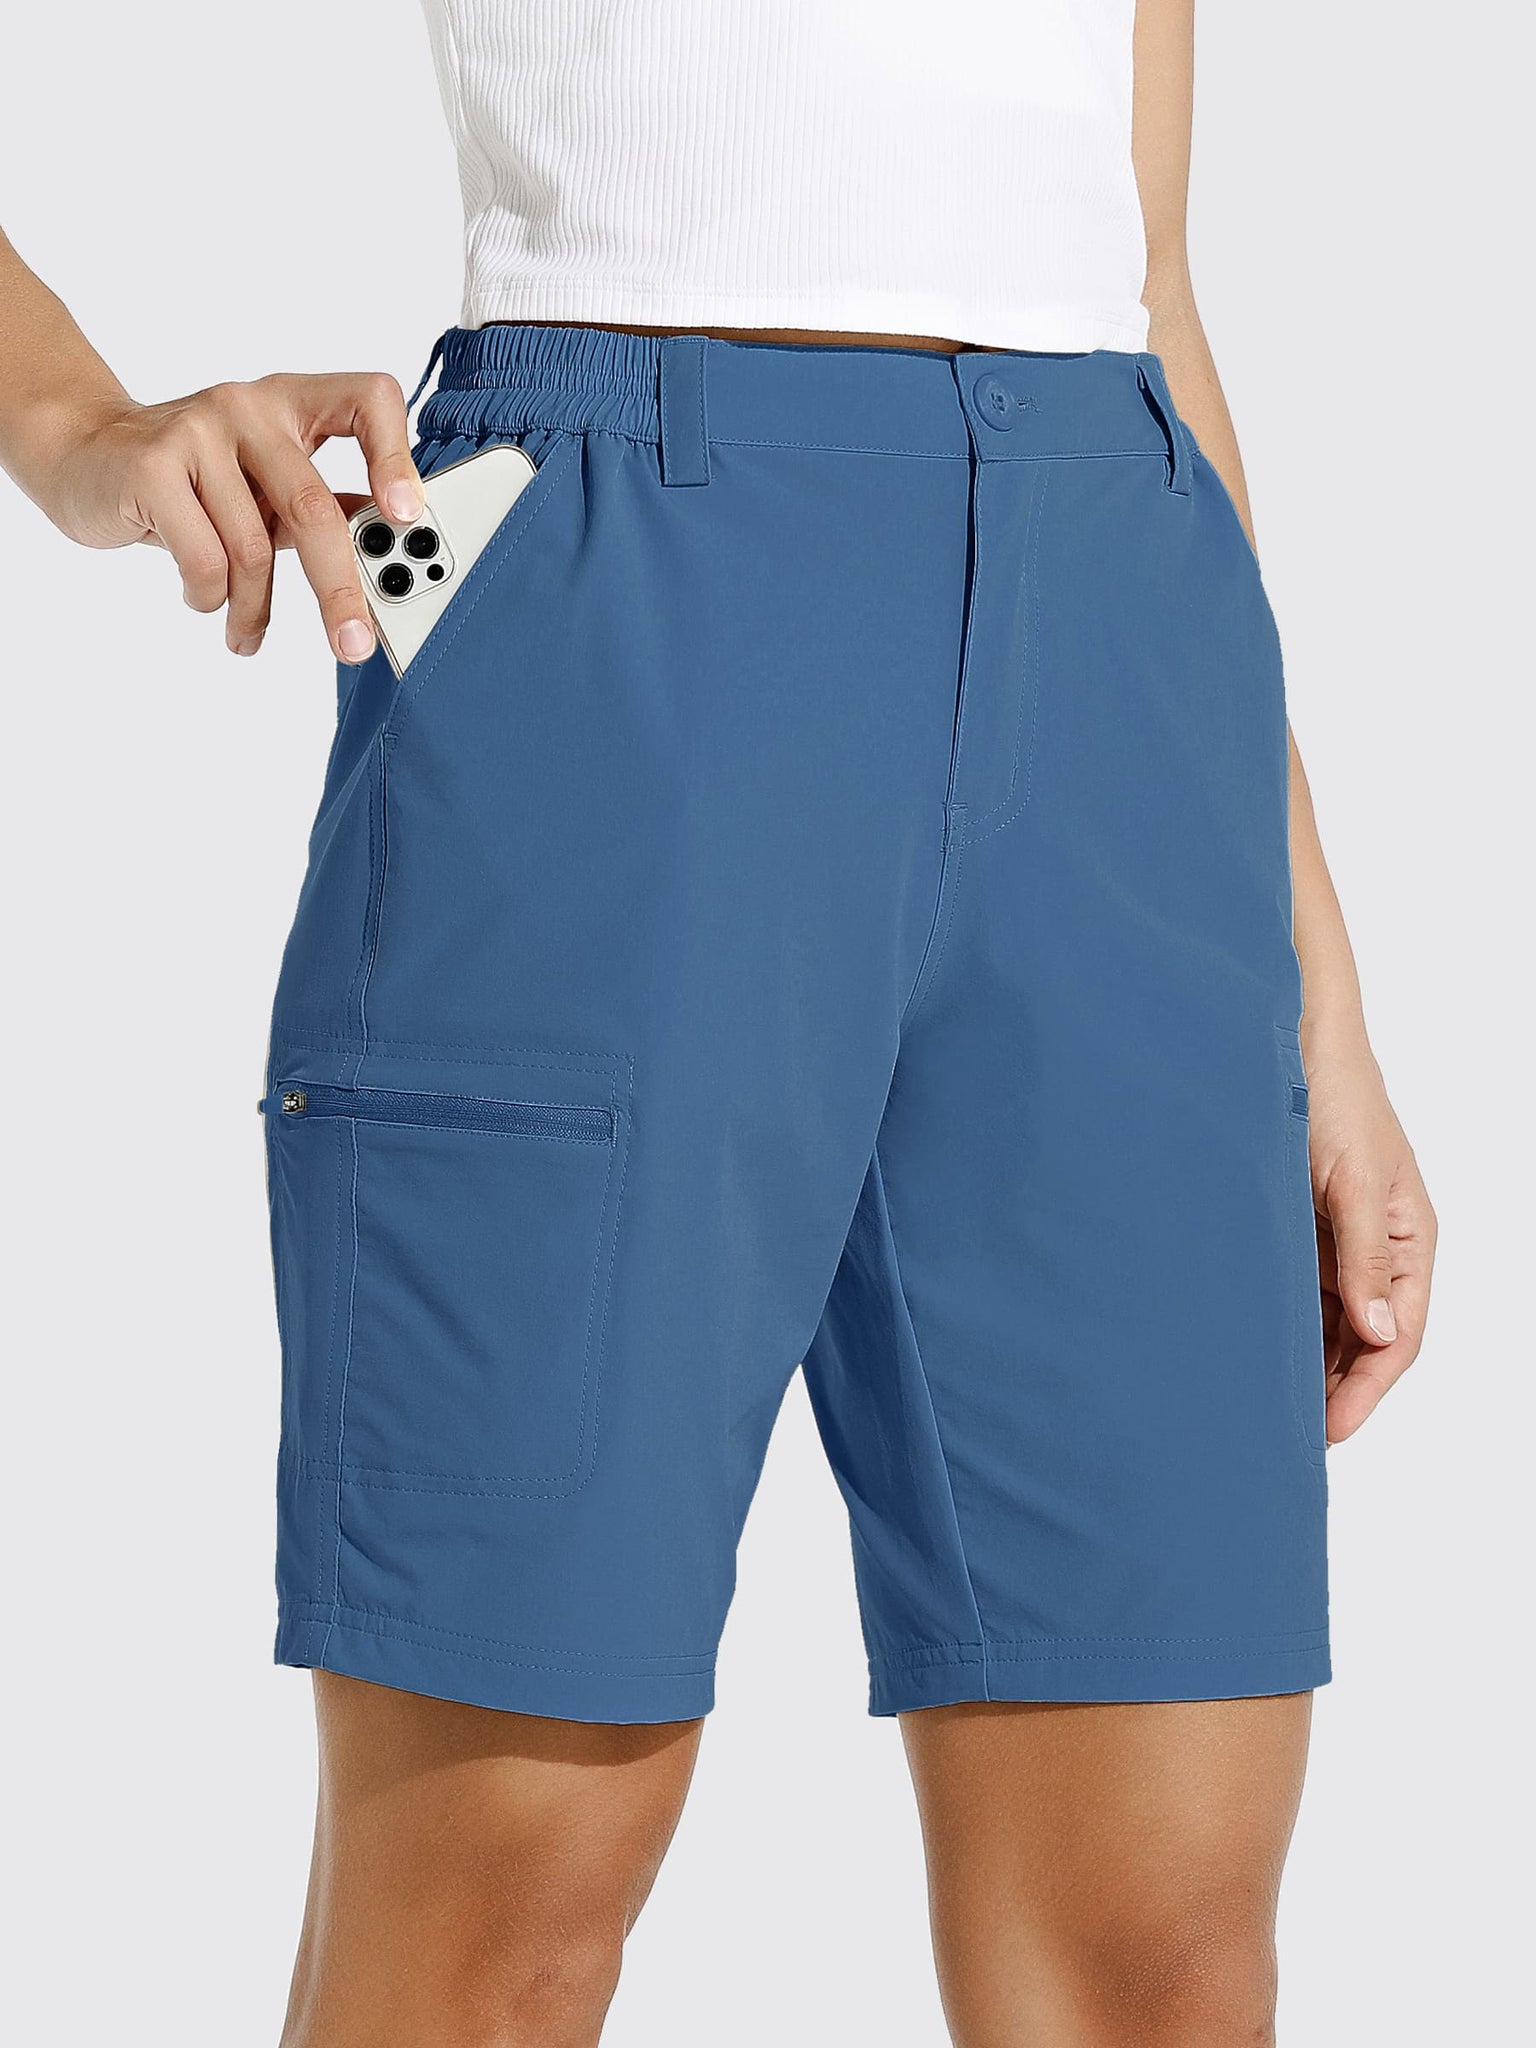 Women's Outdoor Cargo Shorts 10 Inseam_Blue1